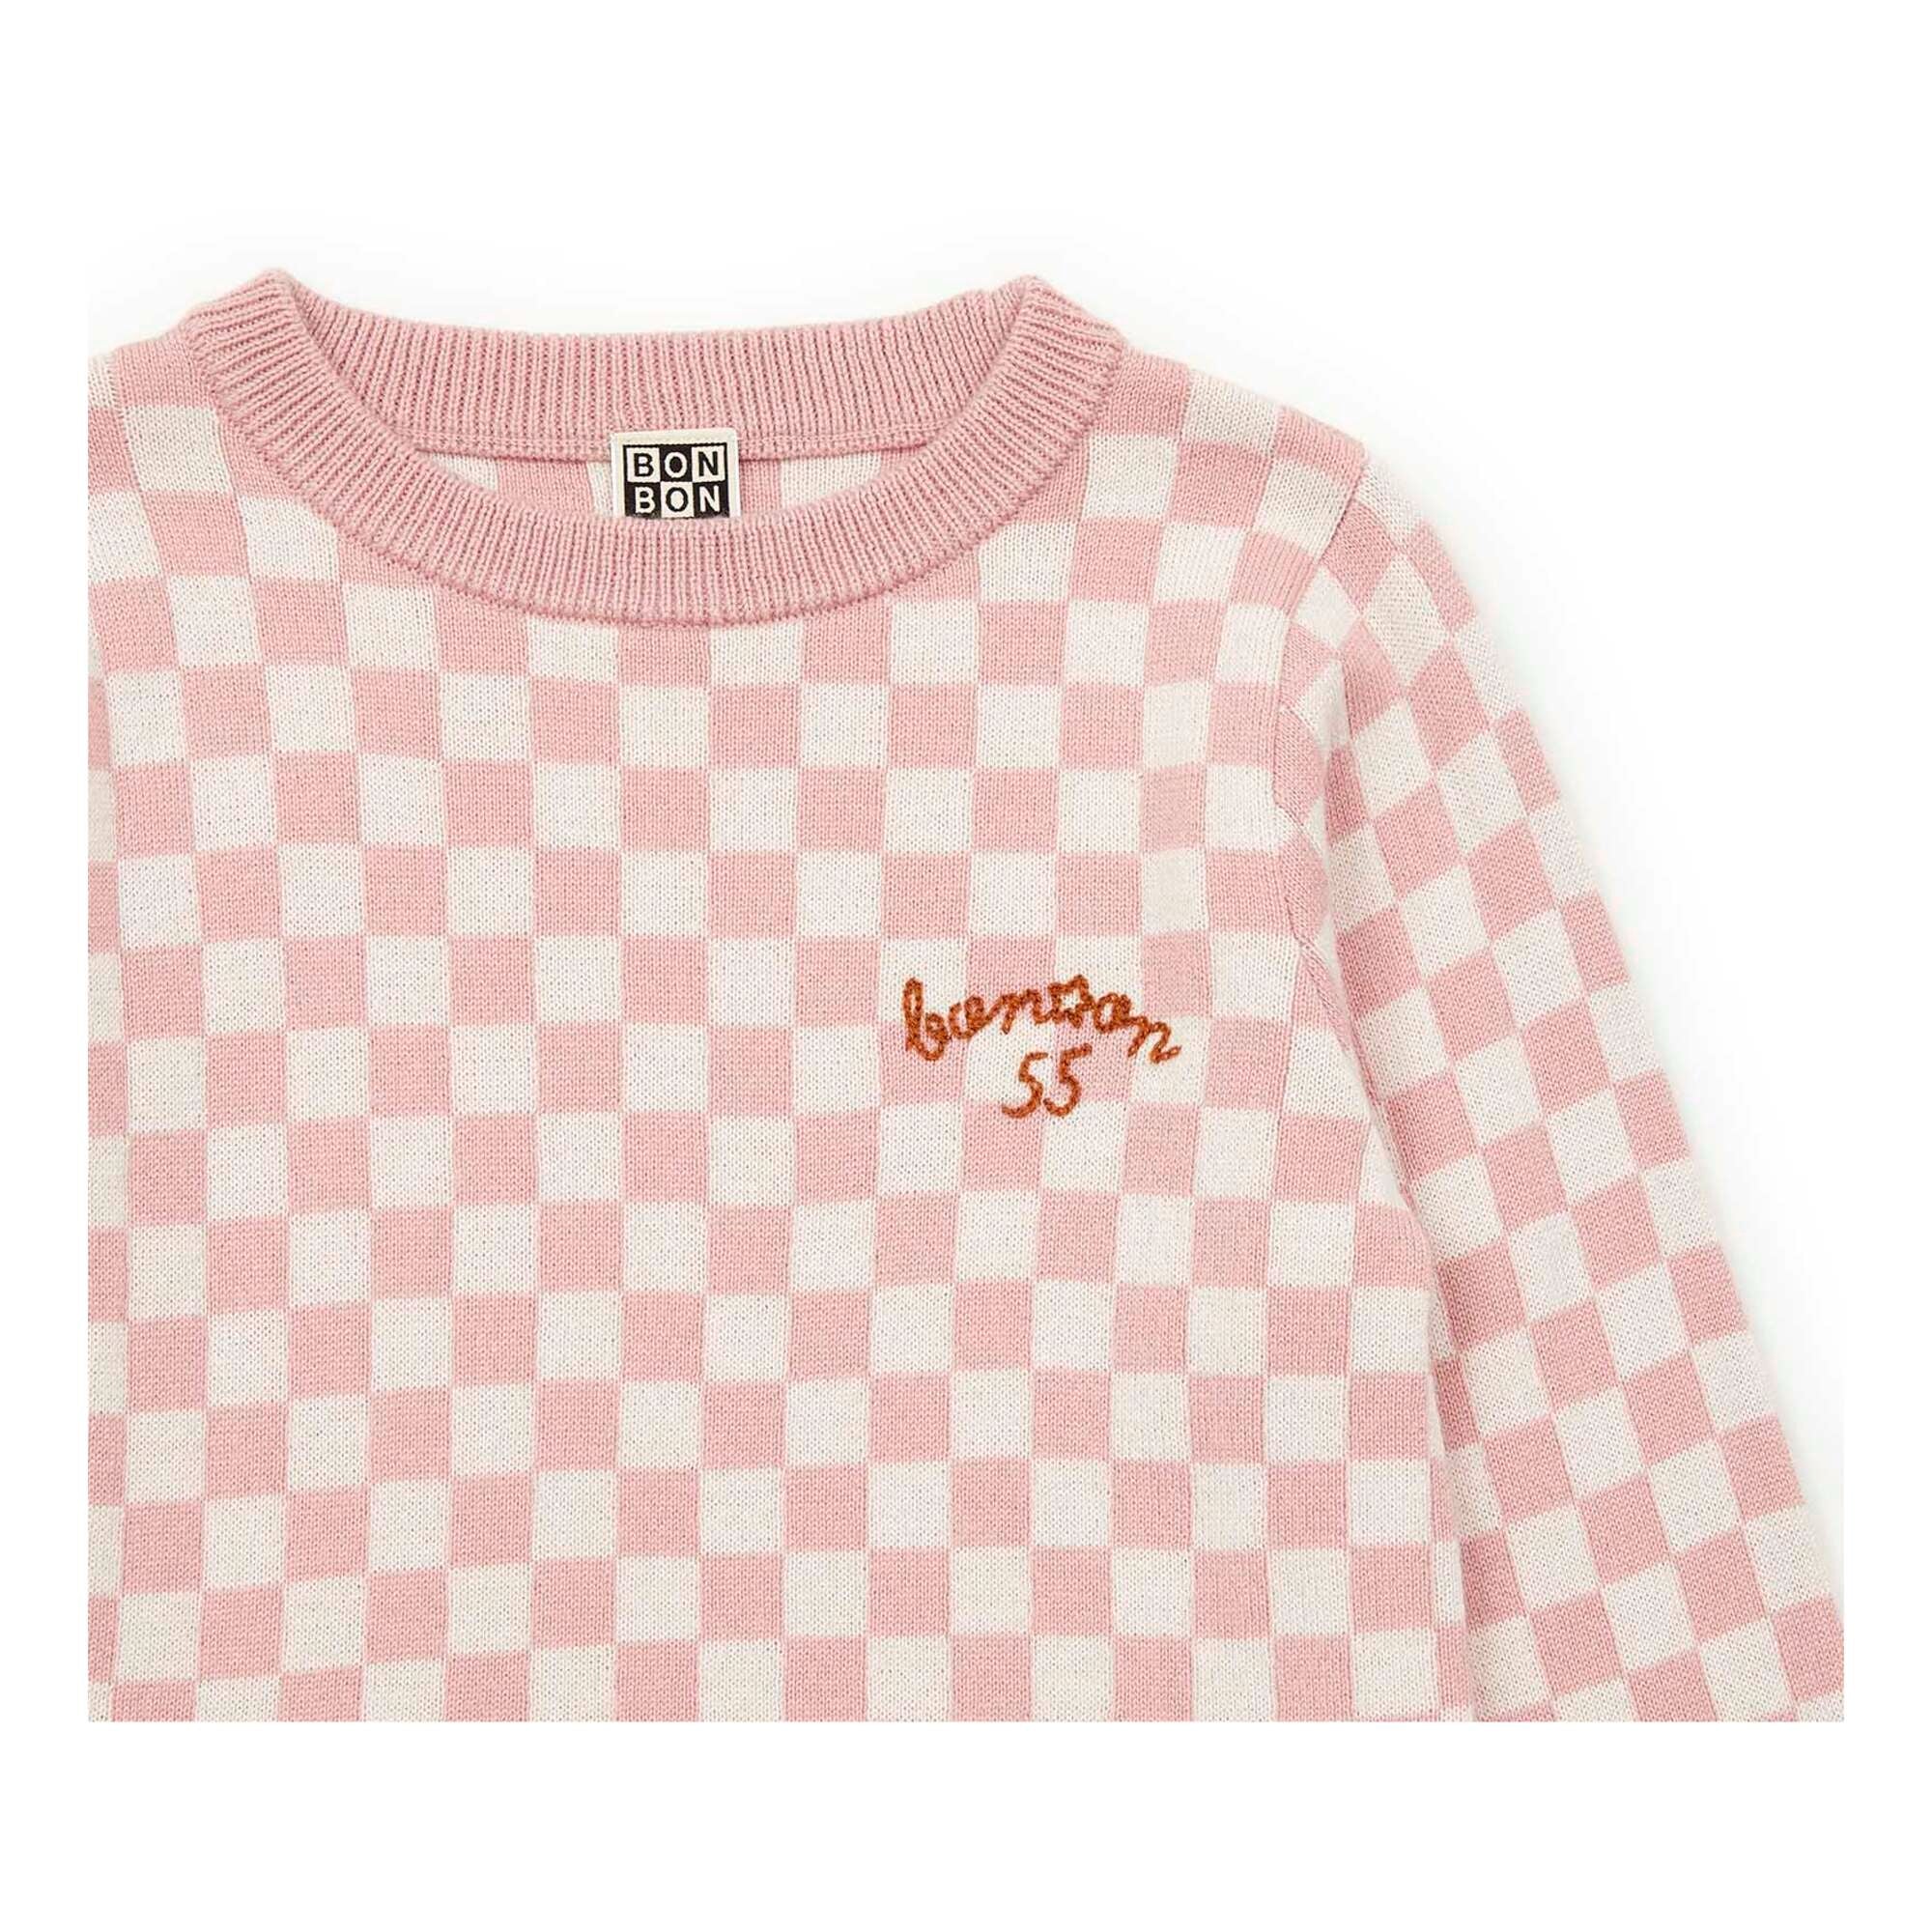 Girls Pink Check Wool Sweater